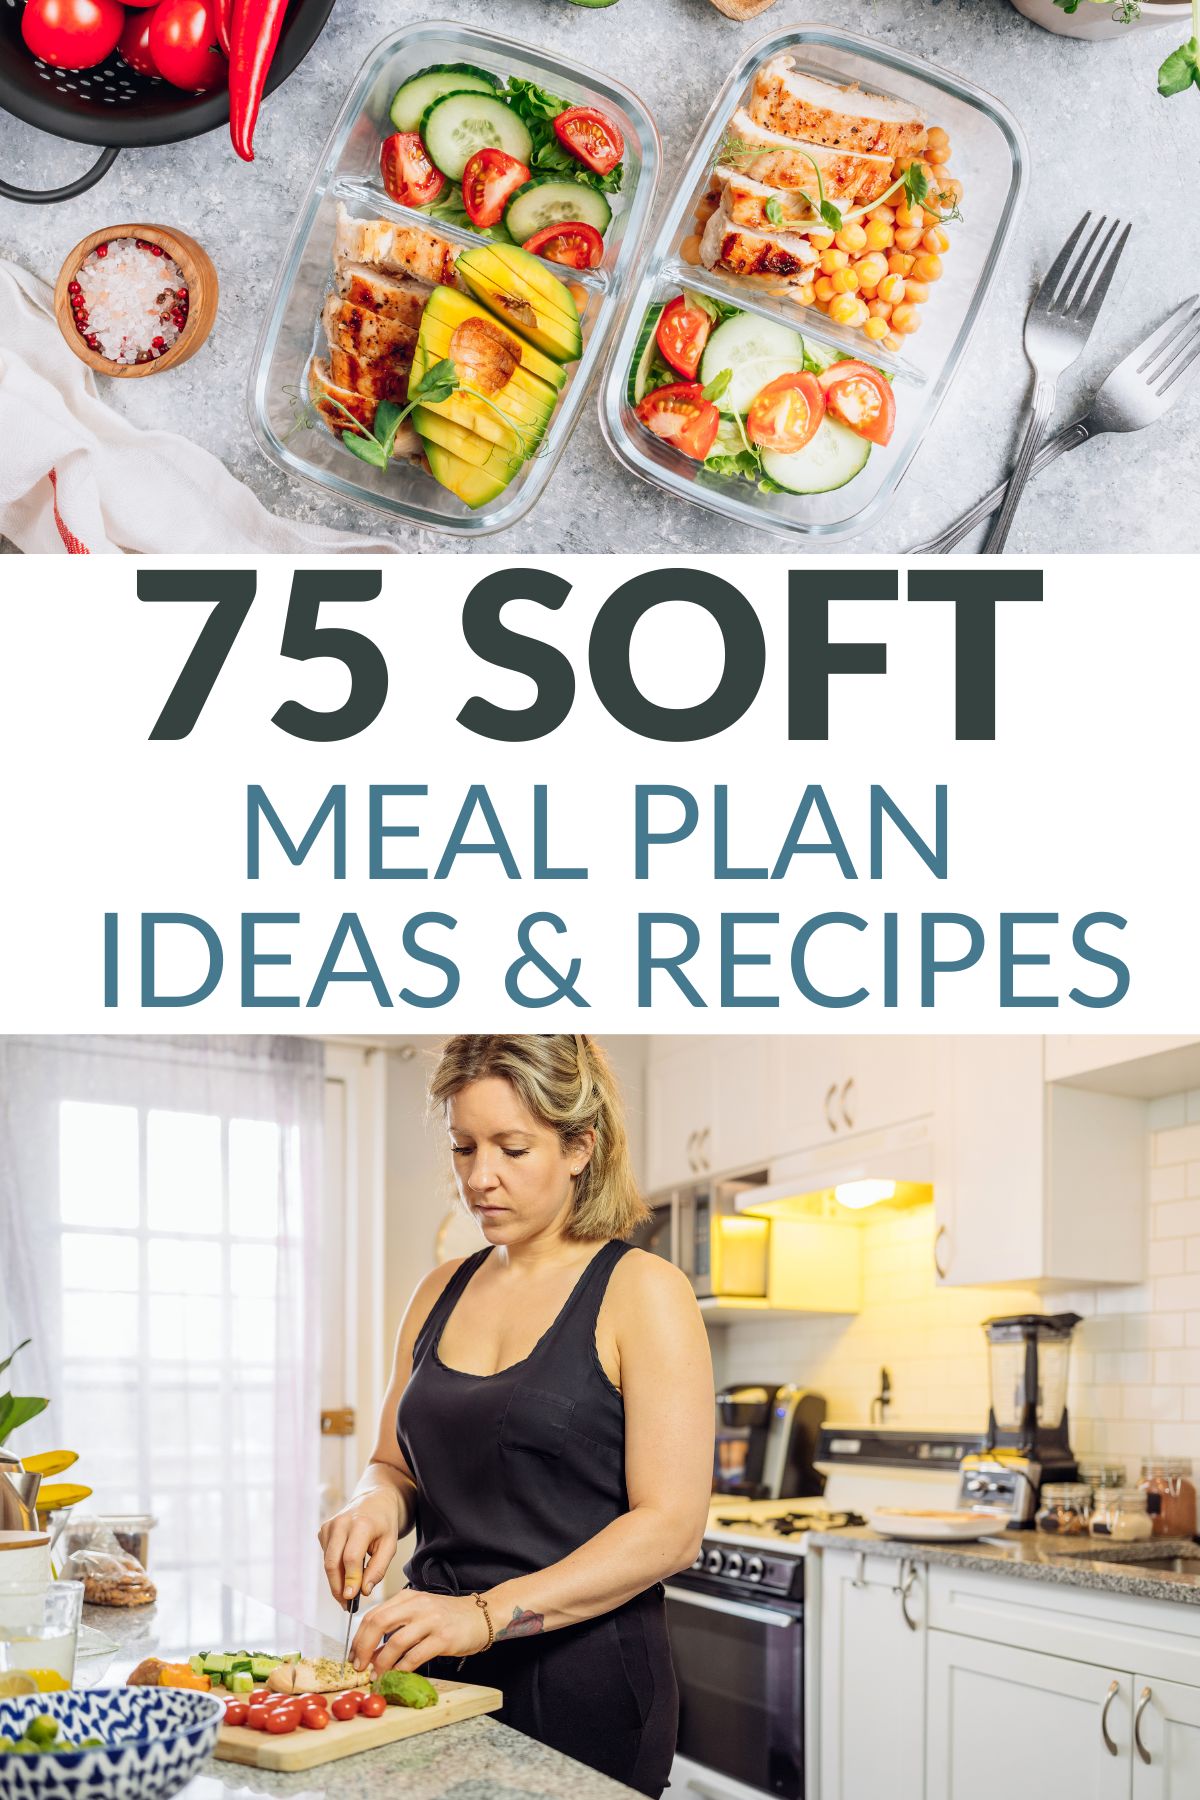 75 Soft Challenge Meal Plan Ideas, Food List & Recipes – 75 Soft